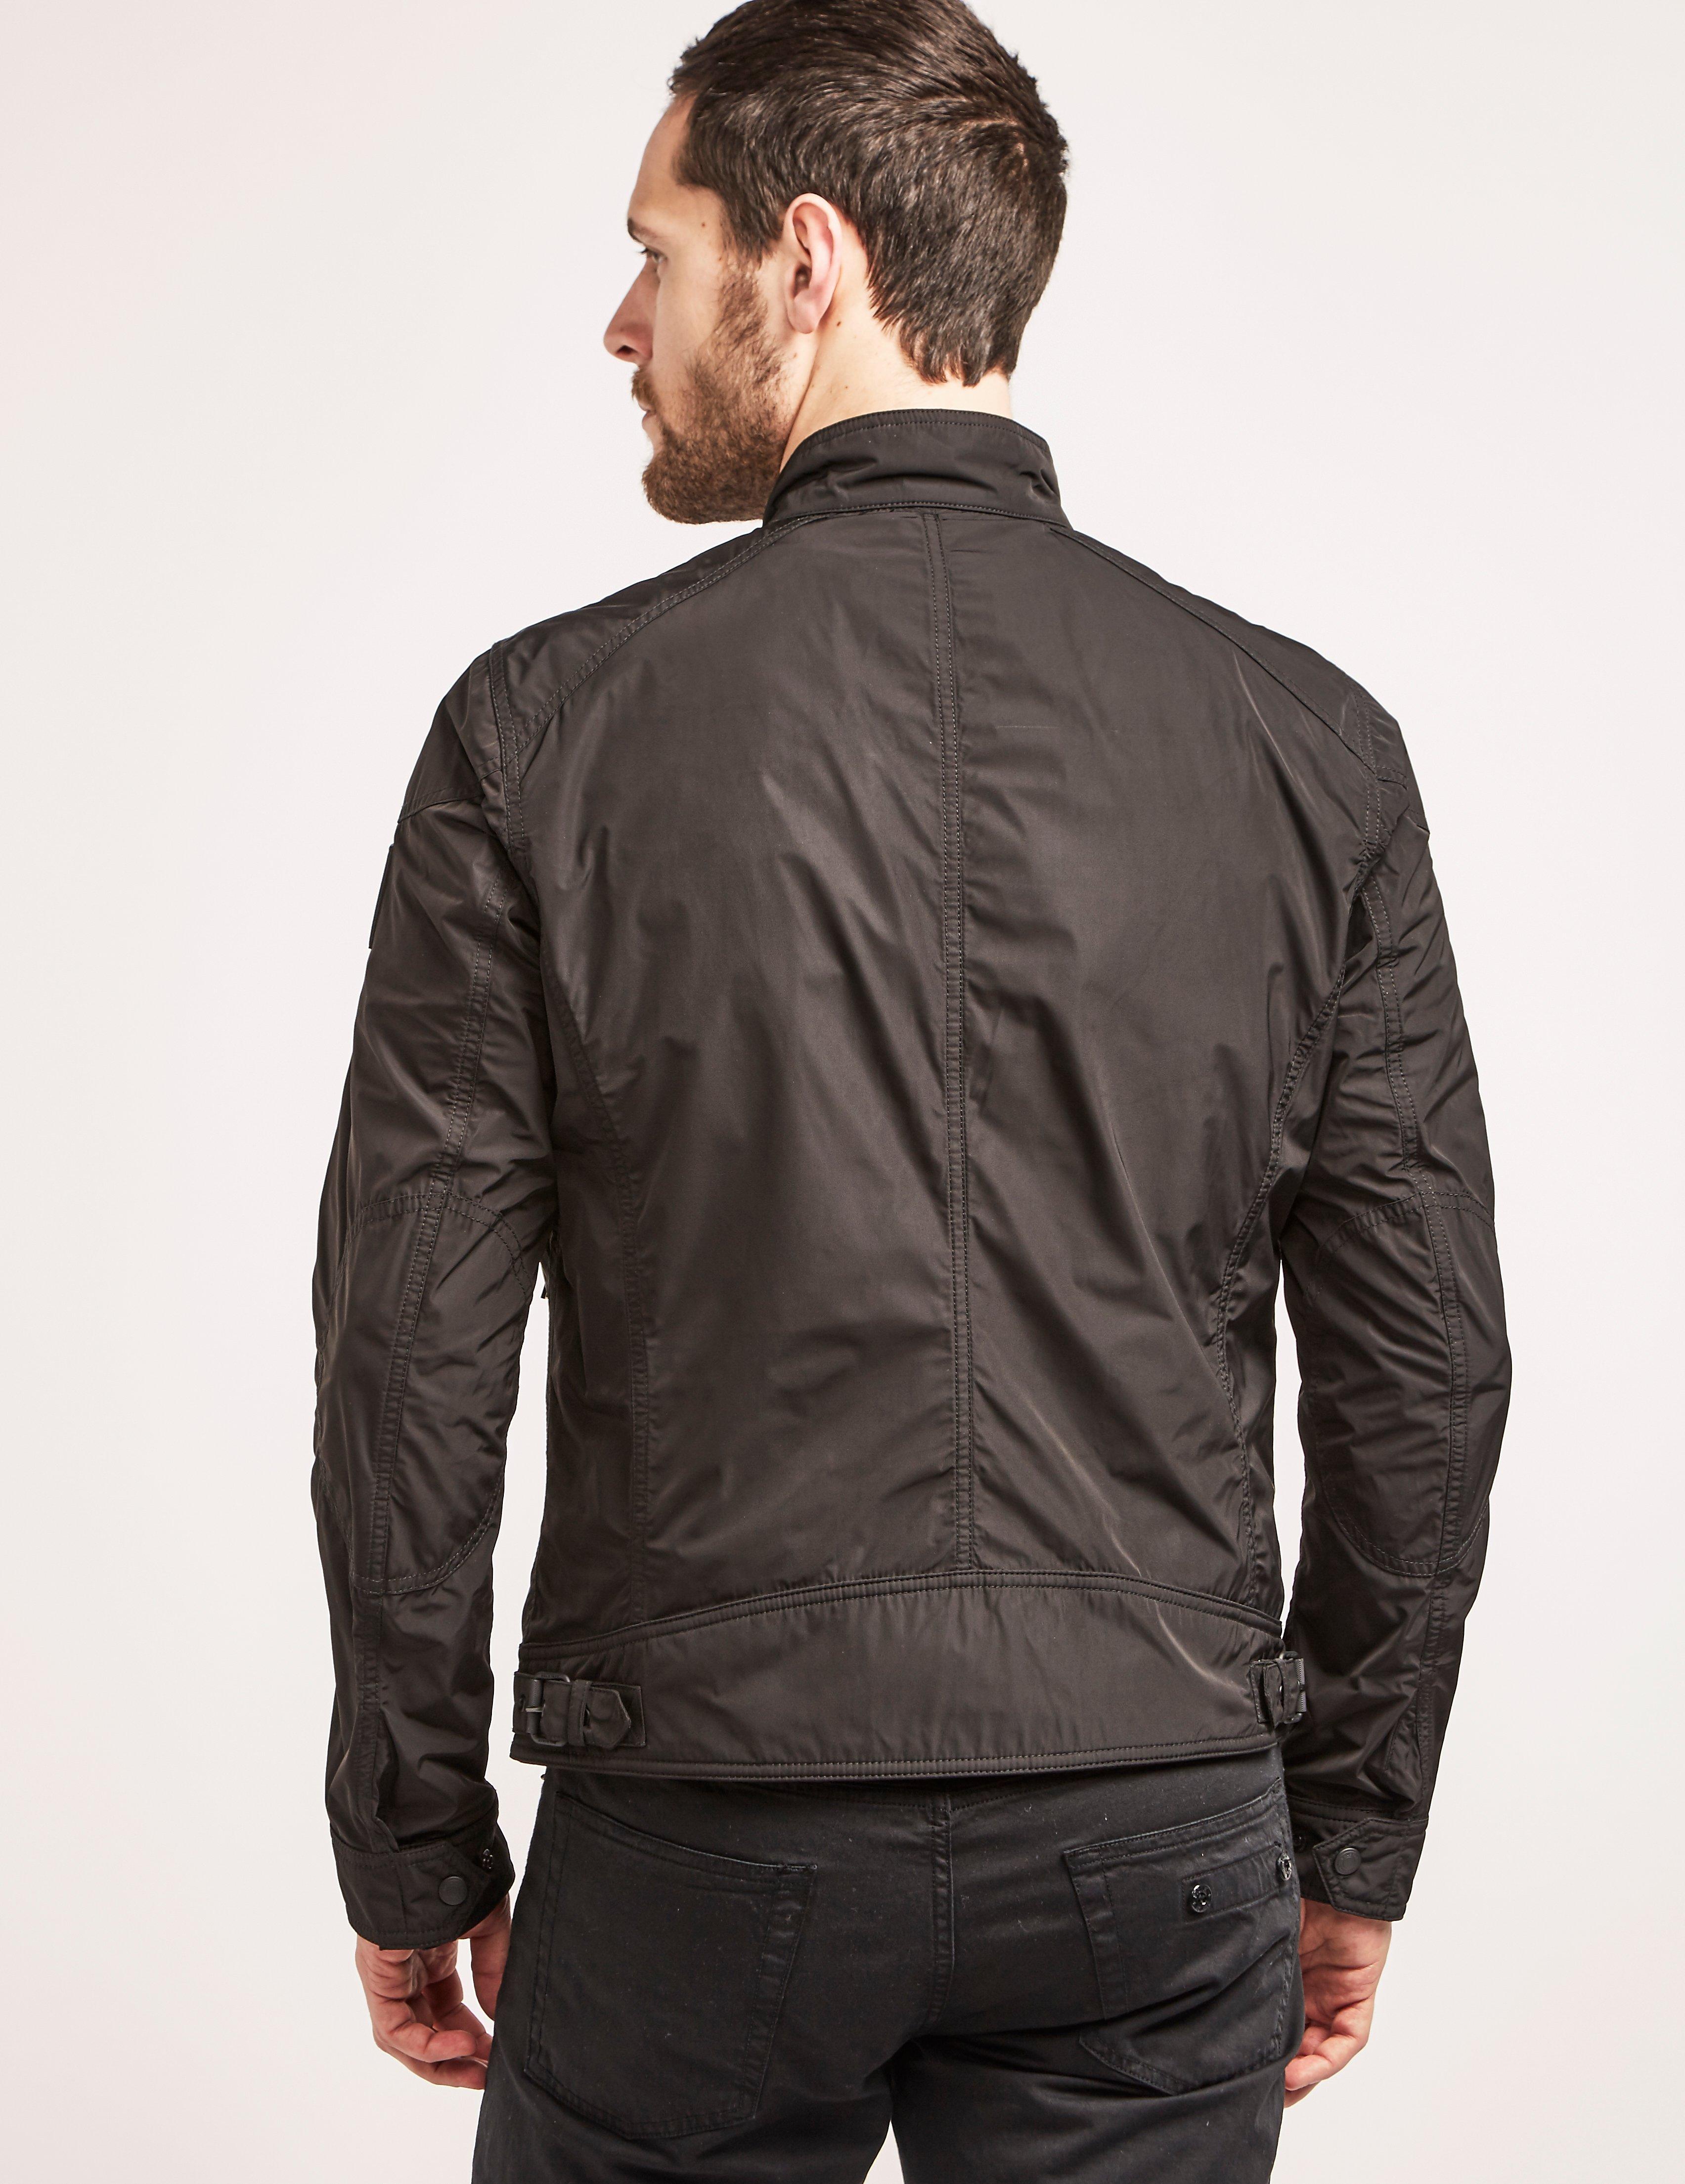 Belstaff Synthetic Racemaster Nylon Jacket in Black for Men - Lyst